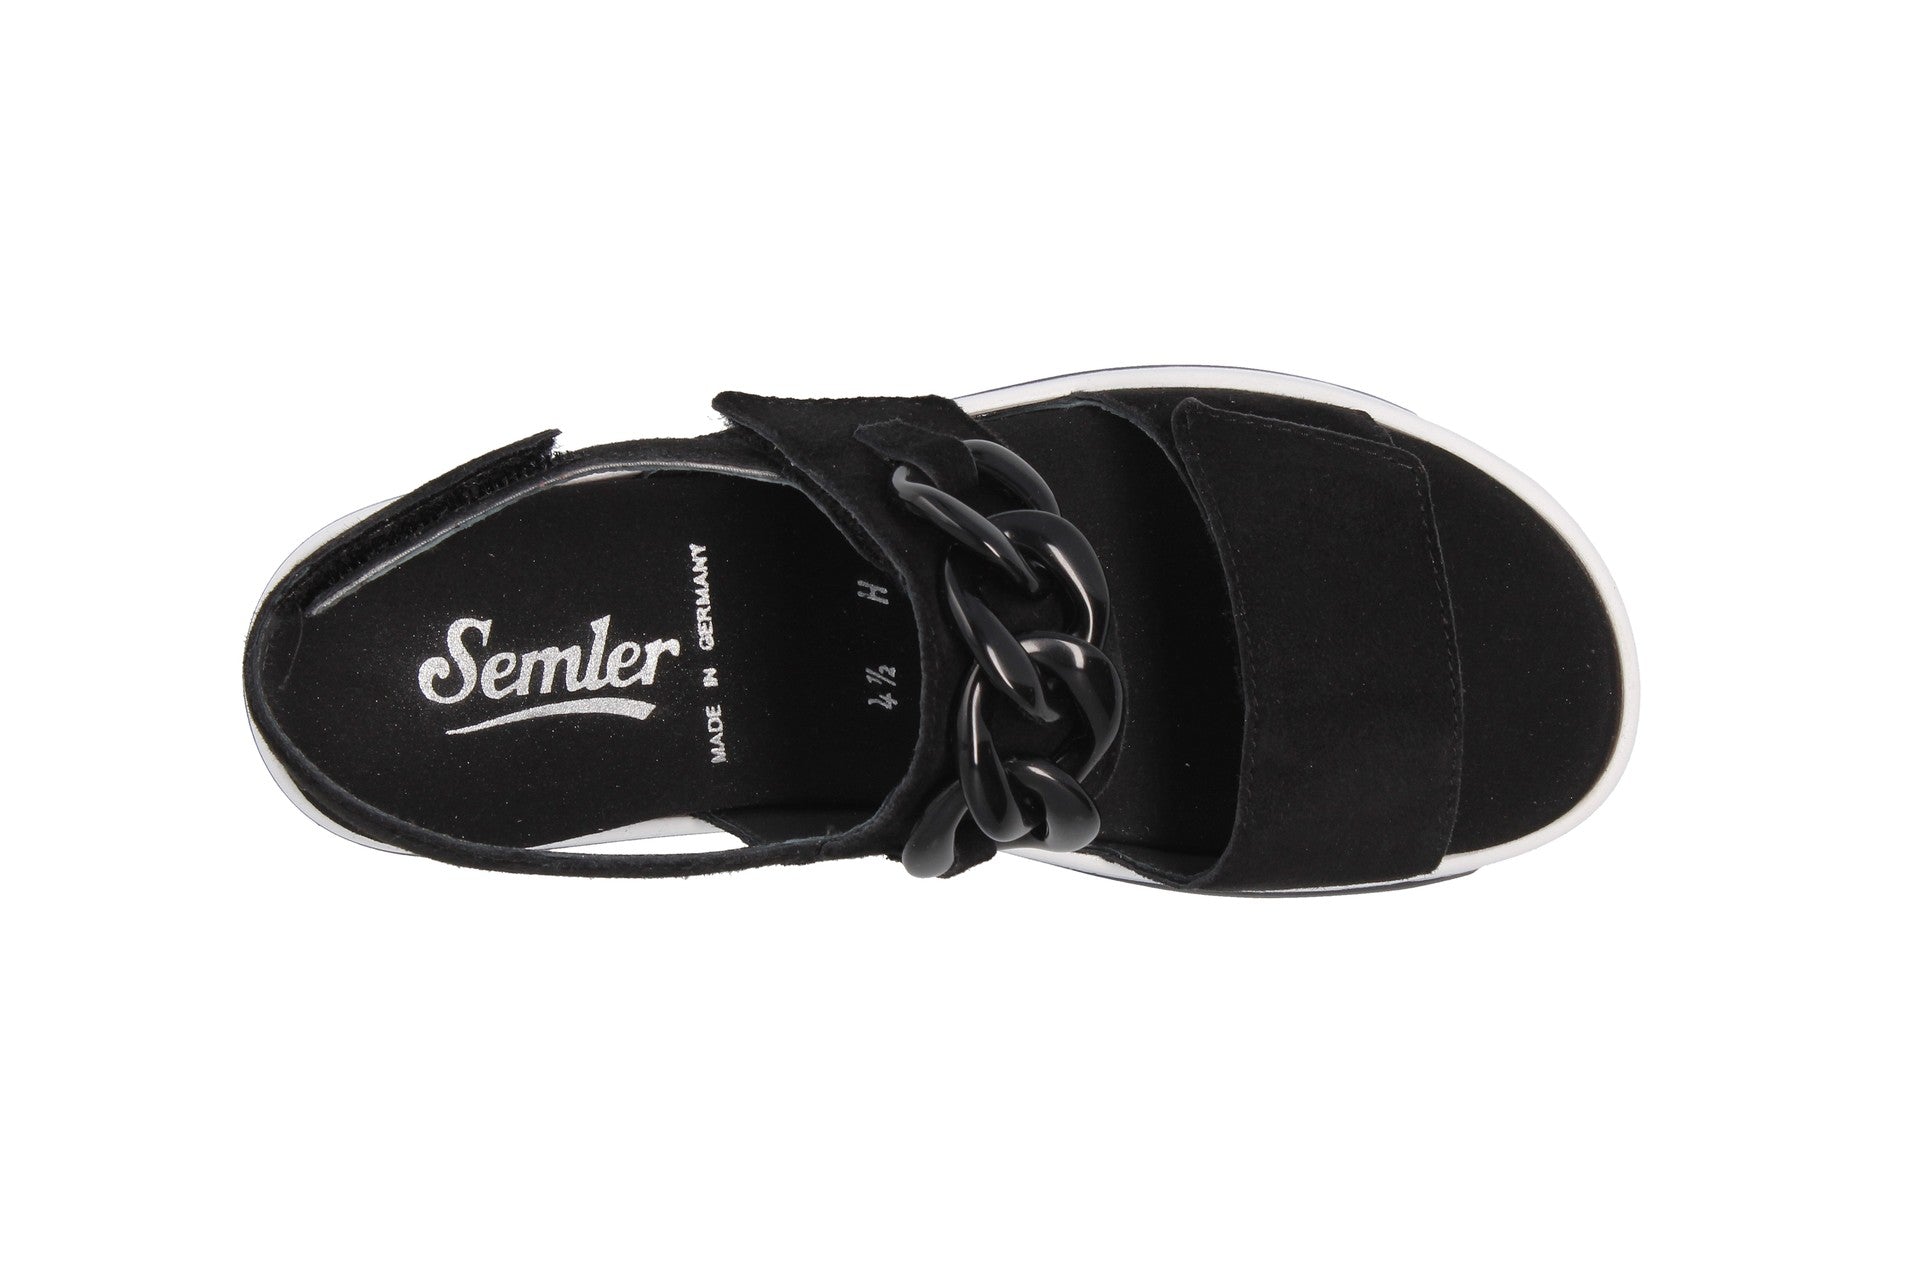 Hanna – black – sandals